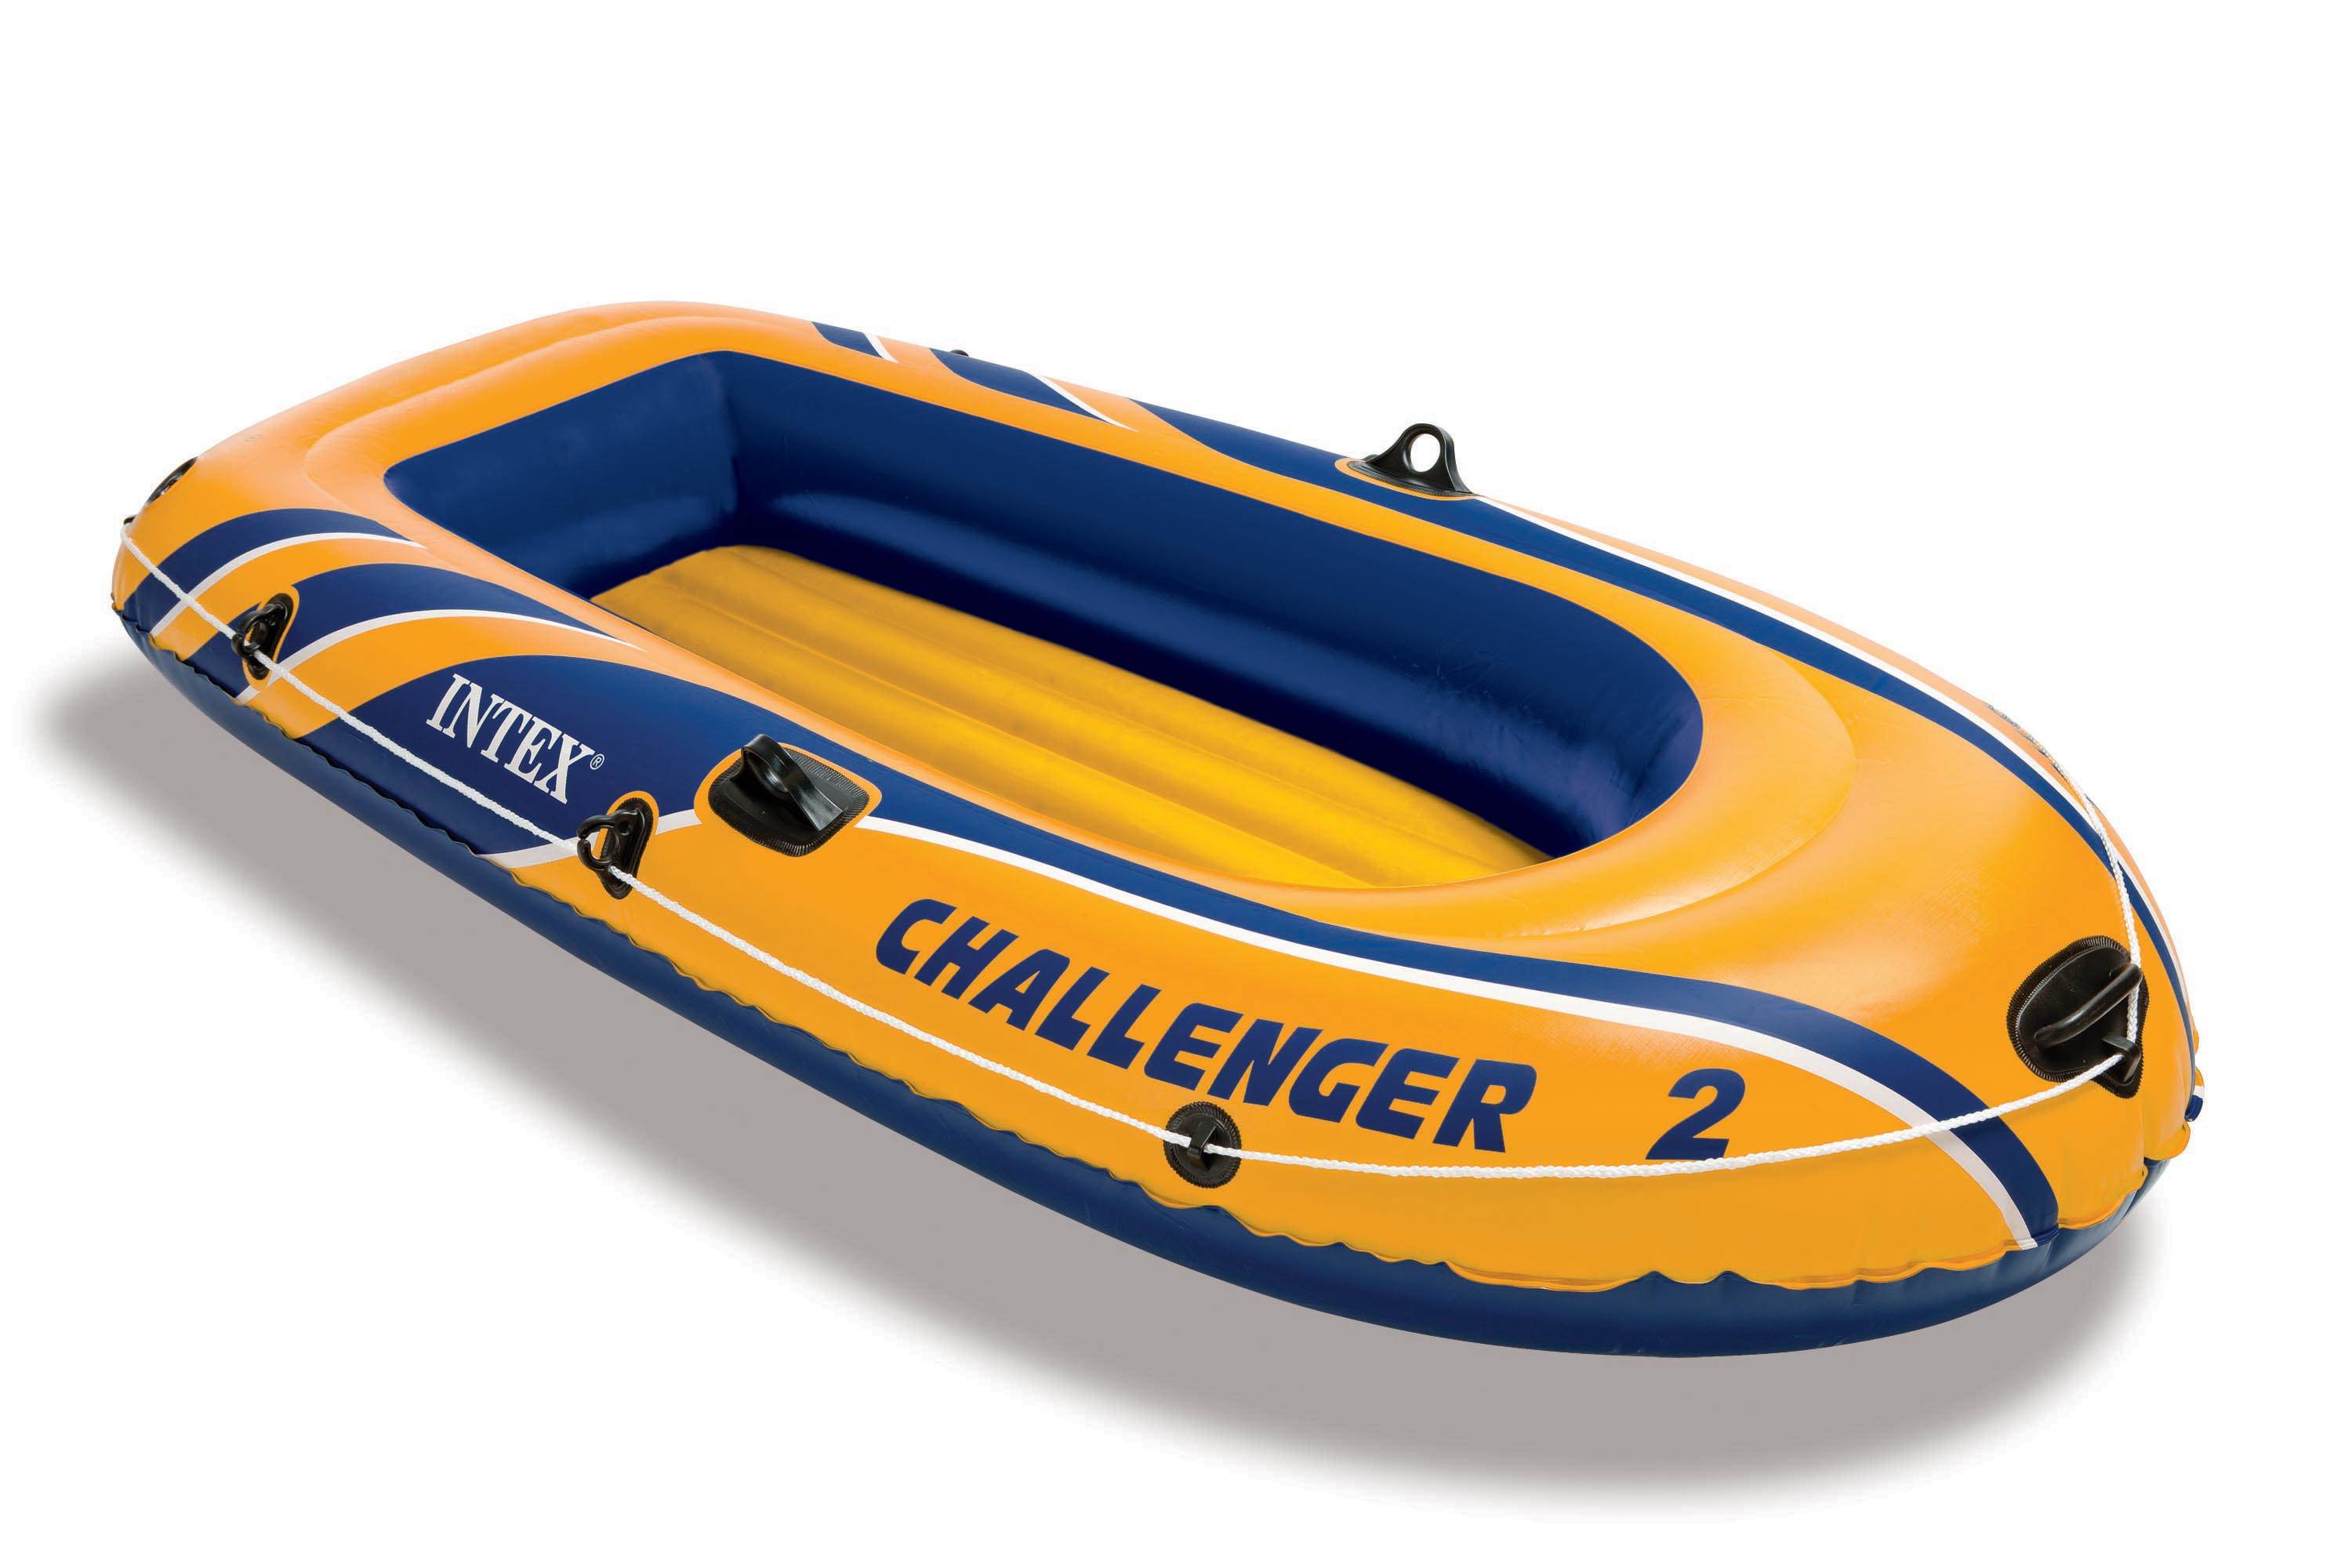 Intex 68355 Challenger 1 River Boat Raft 